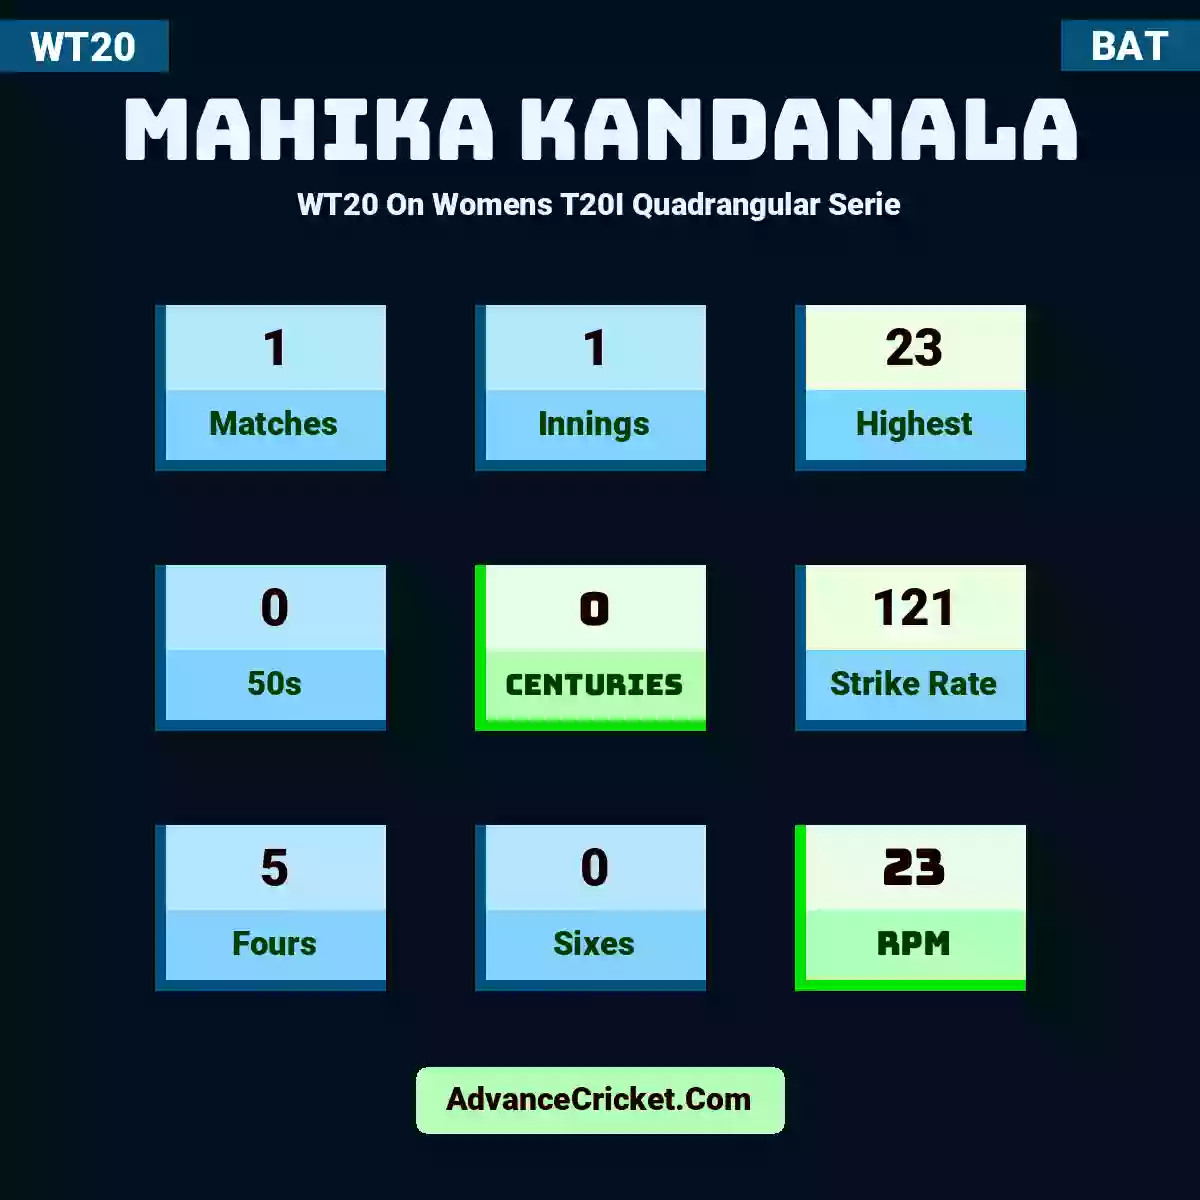 Mahika Kandanala WT20  On Womens T20I Quadrangular Serie, Mahika Kandanala played 1 matches, scored 23 runs as highest, 0 half-centuries, and 0 centuries, with a strike rate of 121. M.Kandanala hit 5 fours and 0 sixes, with an RPM of 23.